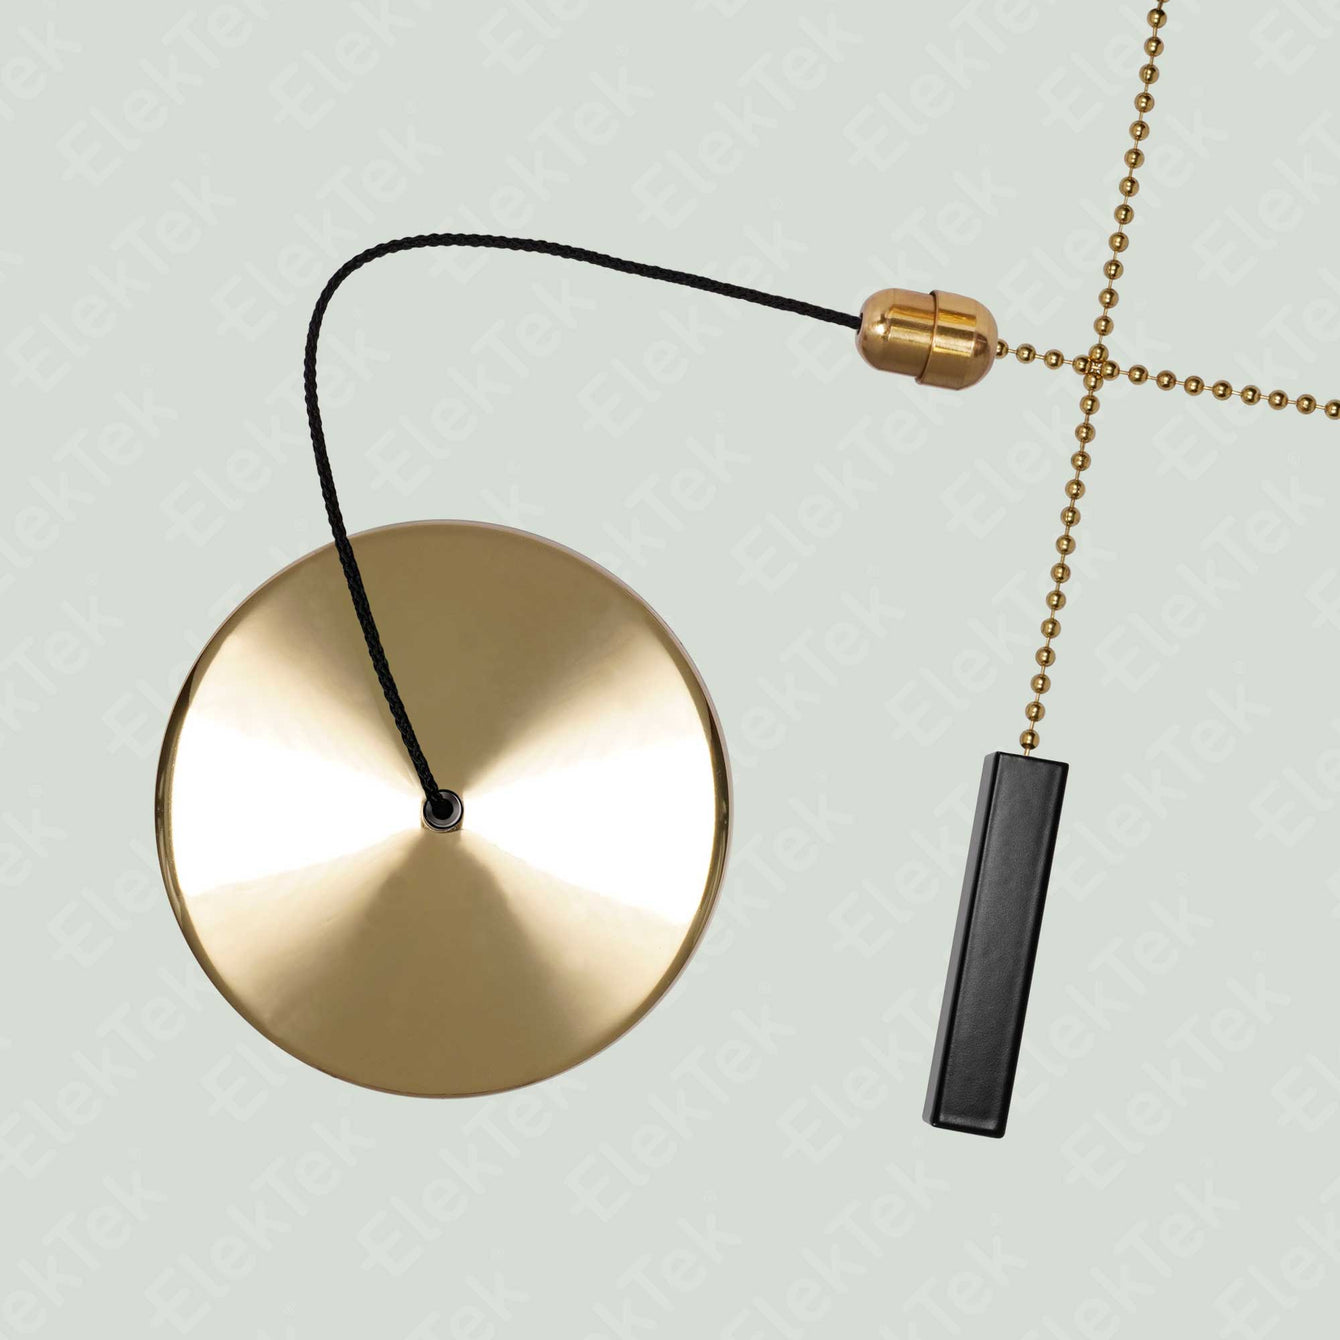 ElekTek Premium Brass Bathroom Light Pull Cord Switch Kit with Pull Chain Handle Black Square Bar / Cord